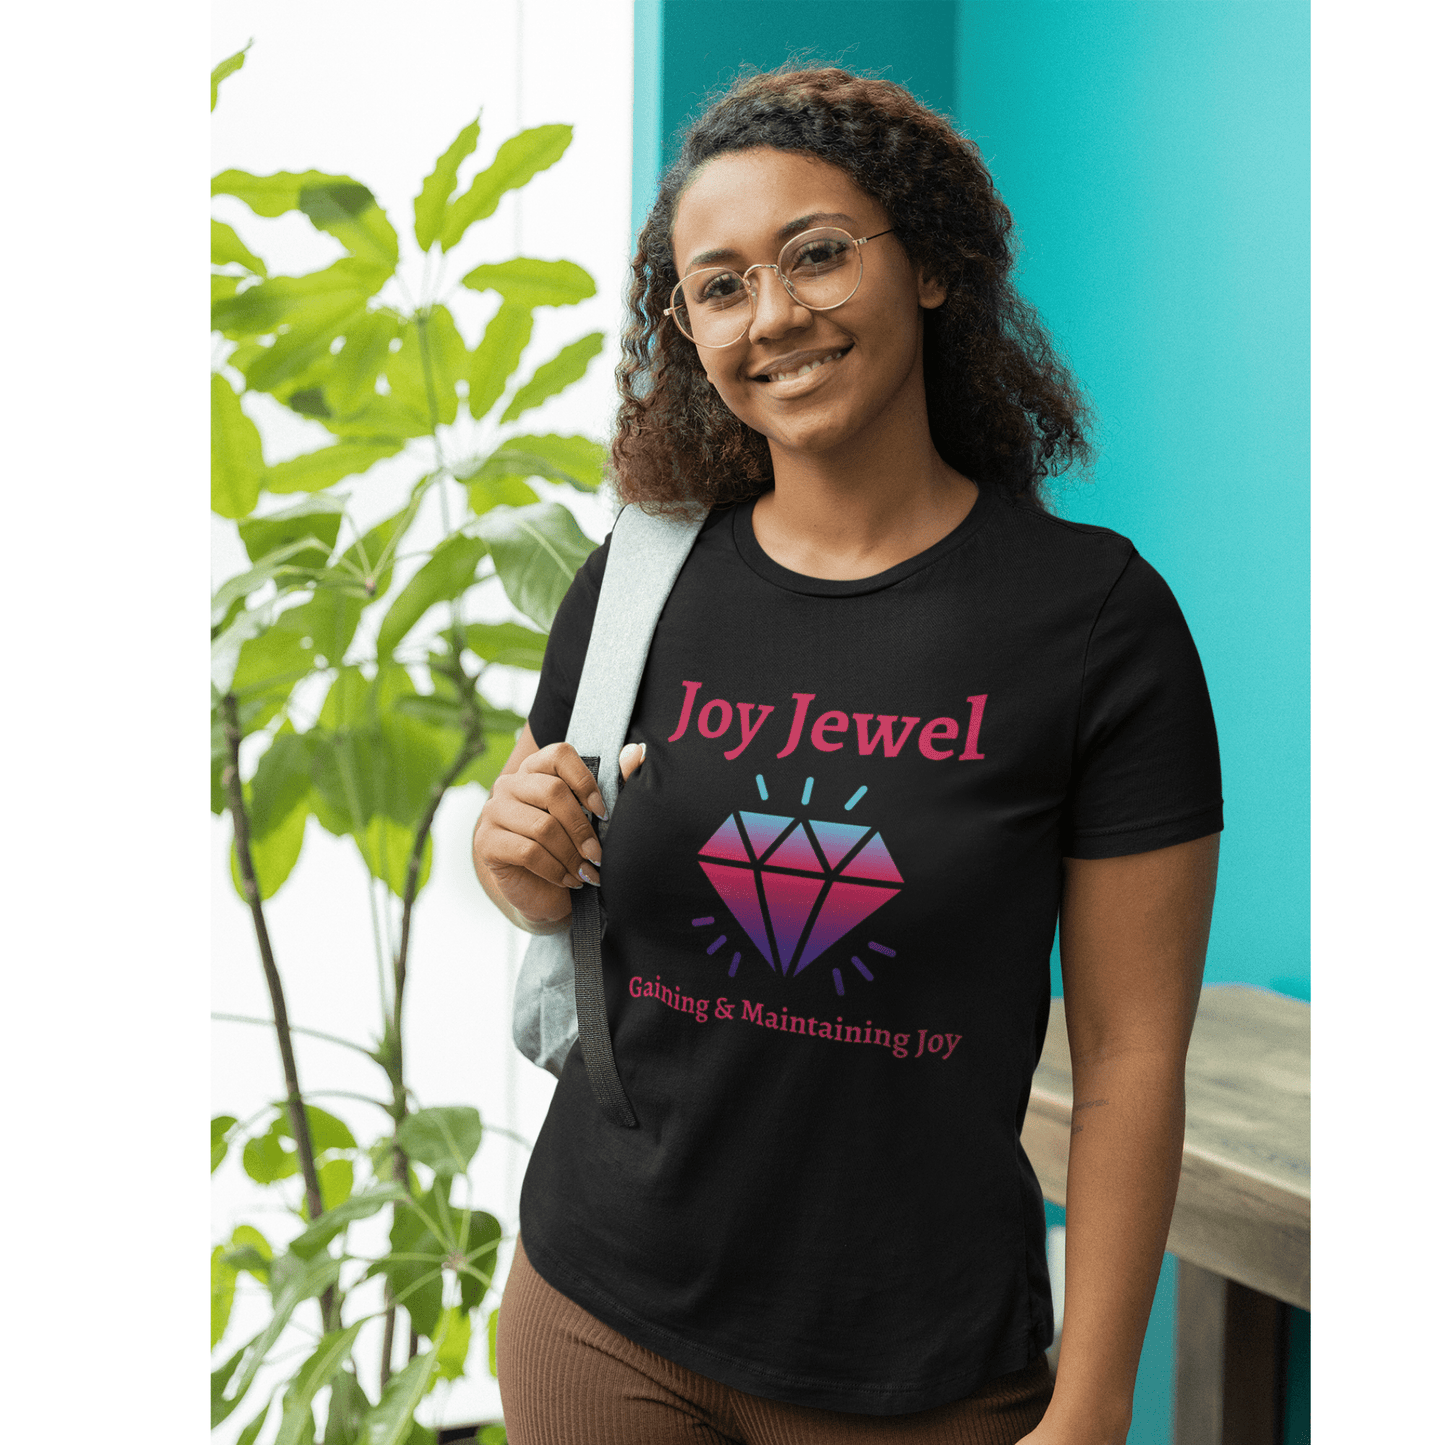 Joy Jewel: Gaining & Maintaining Joy (Large Graphic Fuchsia Text with Colorful Diamond) Unisex Jersey Short Sleeve Tee - Style: Bella+Canvas 3001